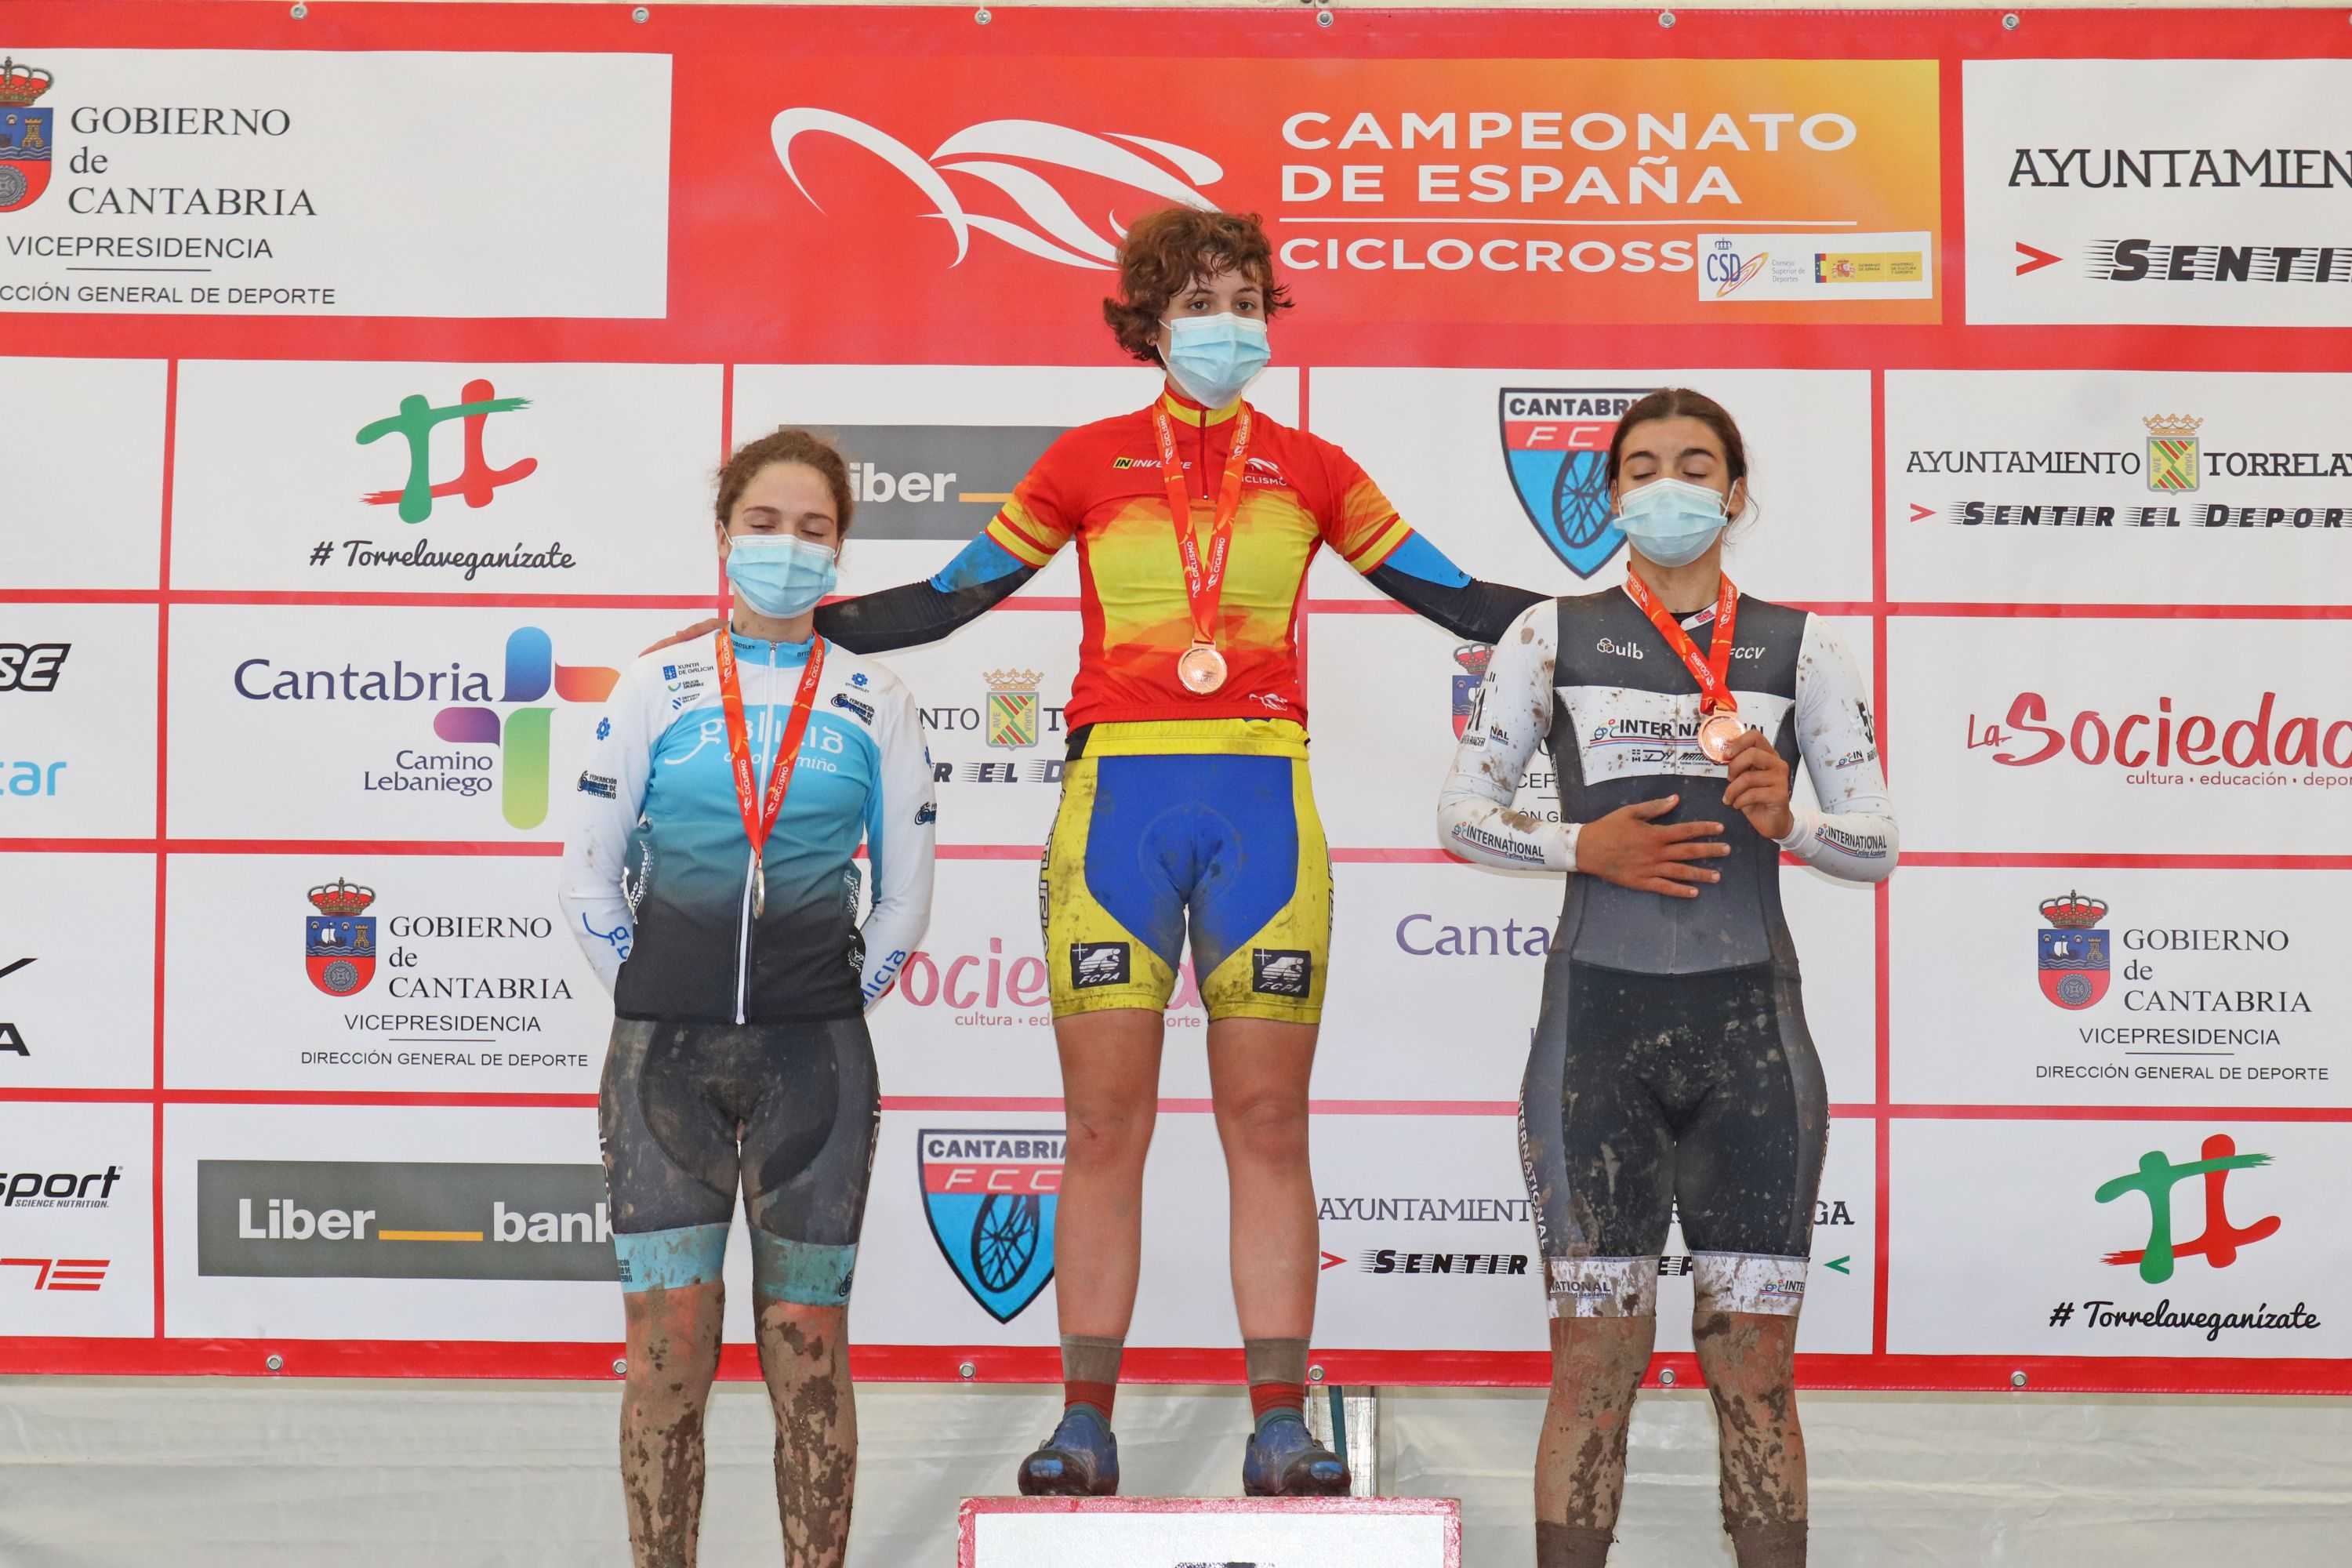 Dez medallas para o ciclocrós galego no tráxico Campionato de España de Torrelavega